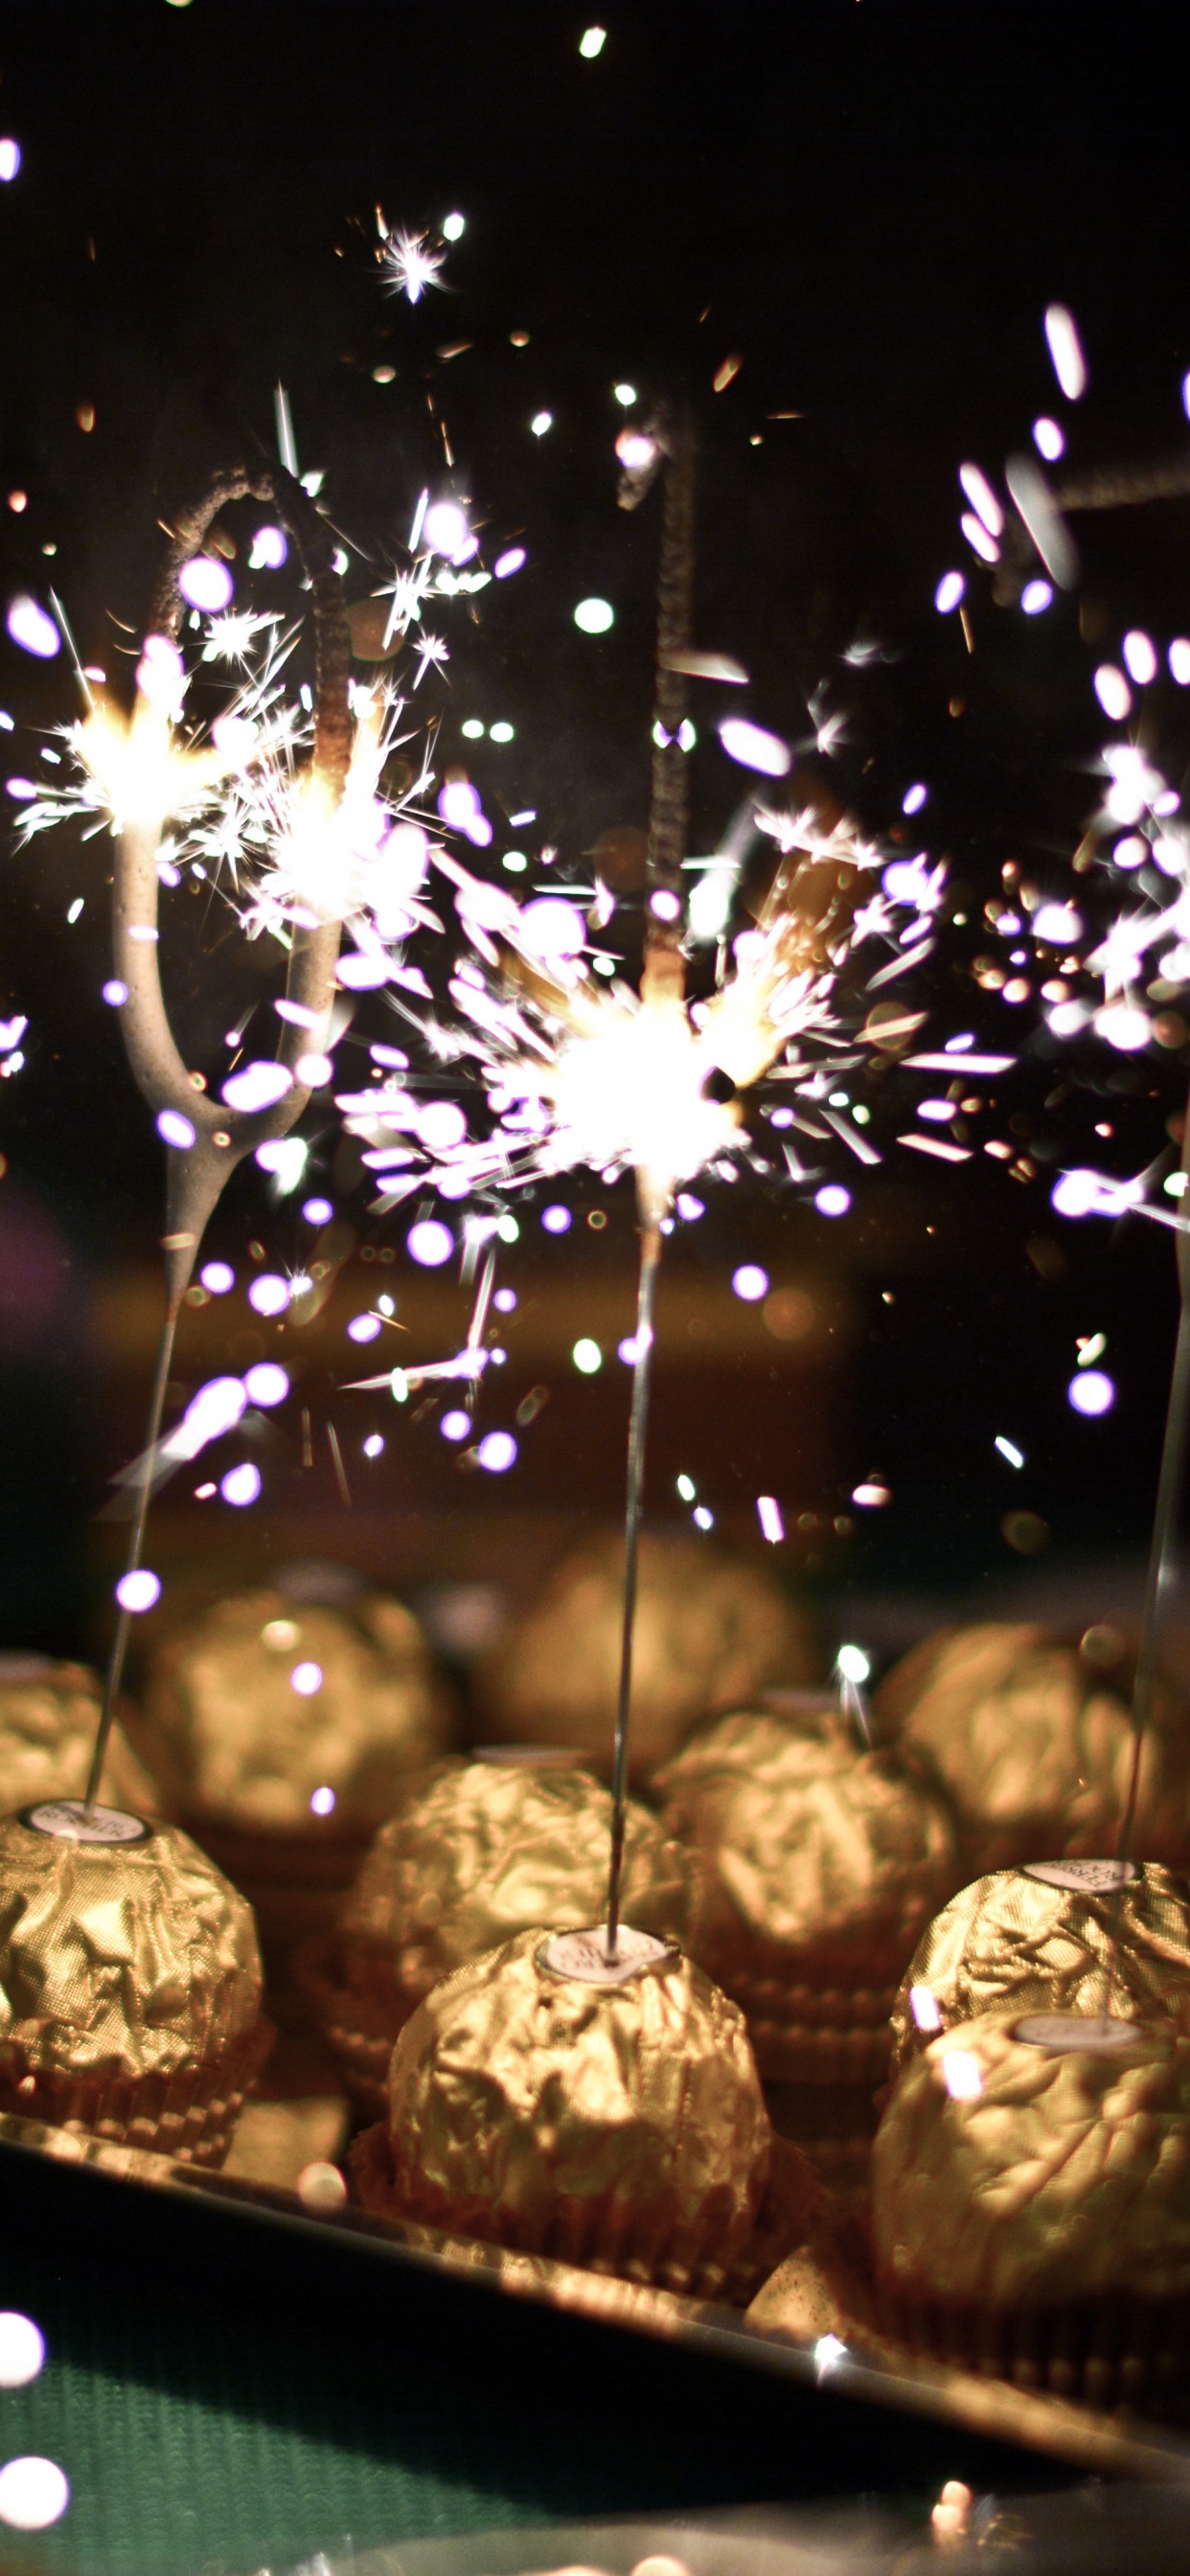 Chocolate Balls, Candy, Chocolate, Fireworks, Sparkler. Wallpaper in 1242x2688 Resolution